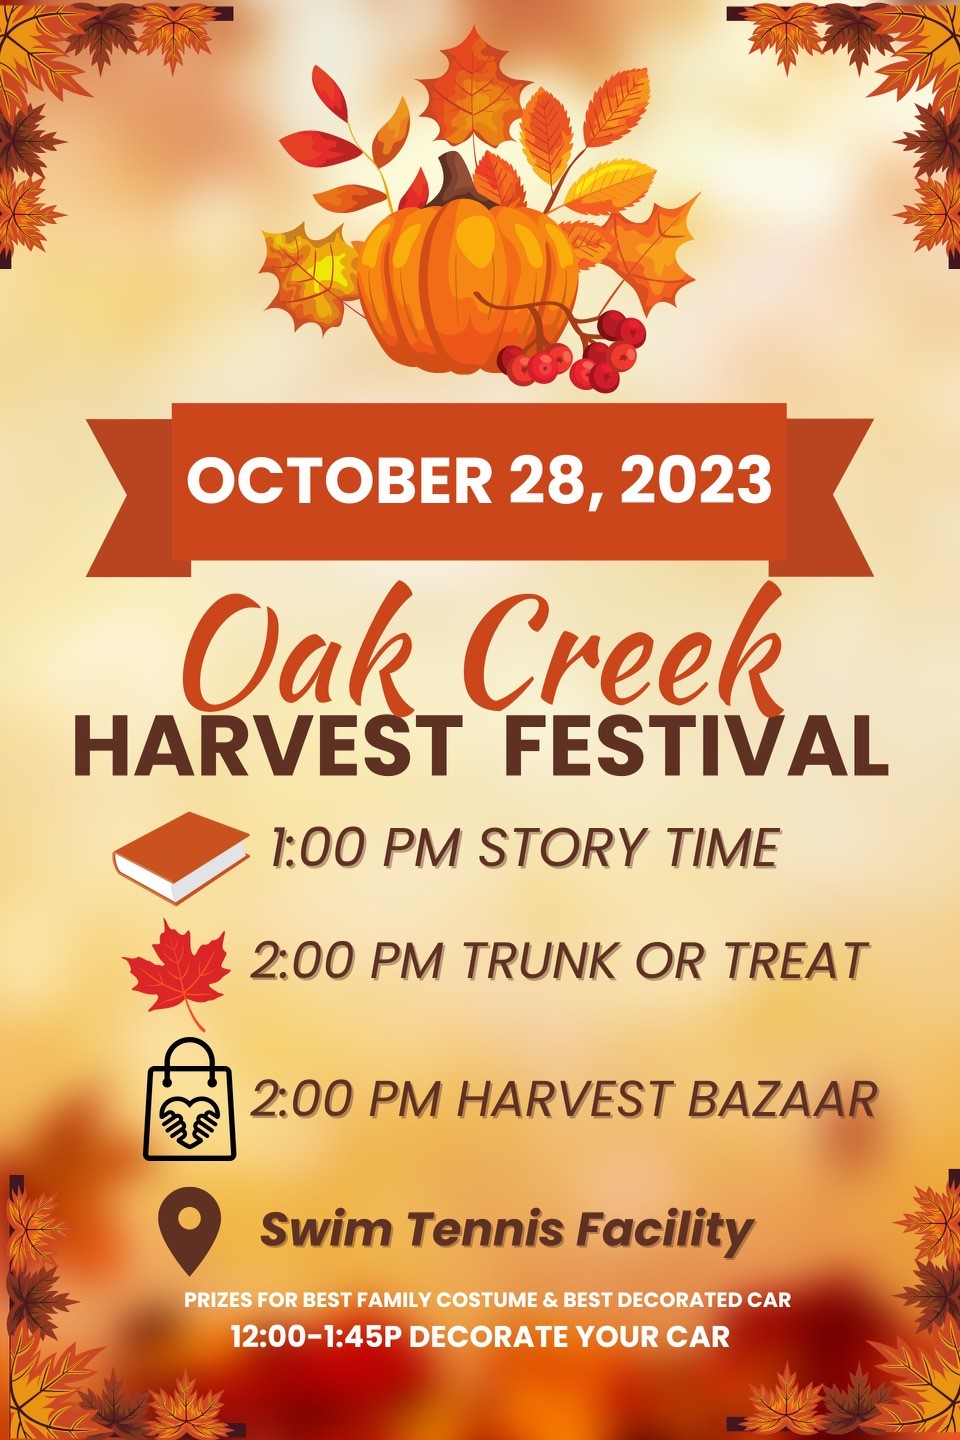 Save The Date: Oak Creek’s Harvest Festival 10/28/23 @1:00 PM